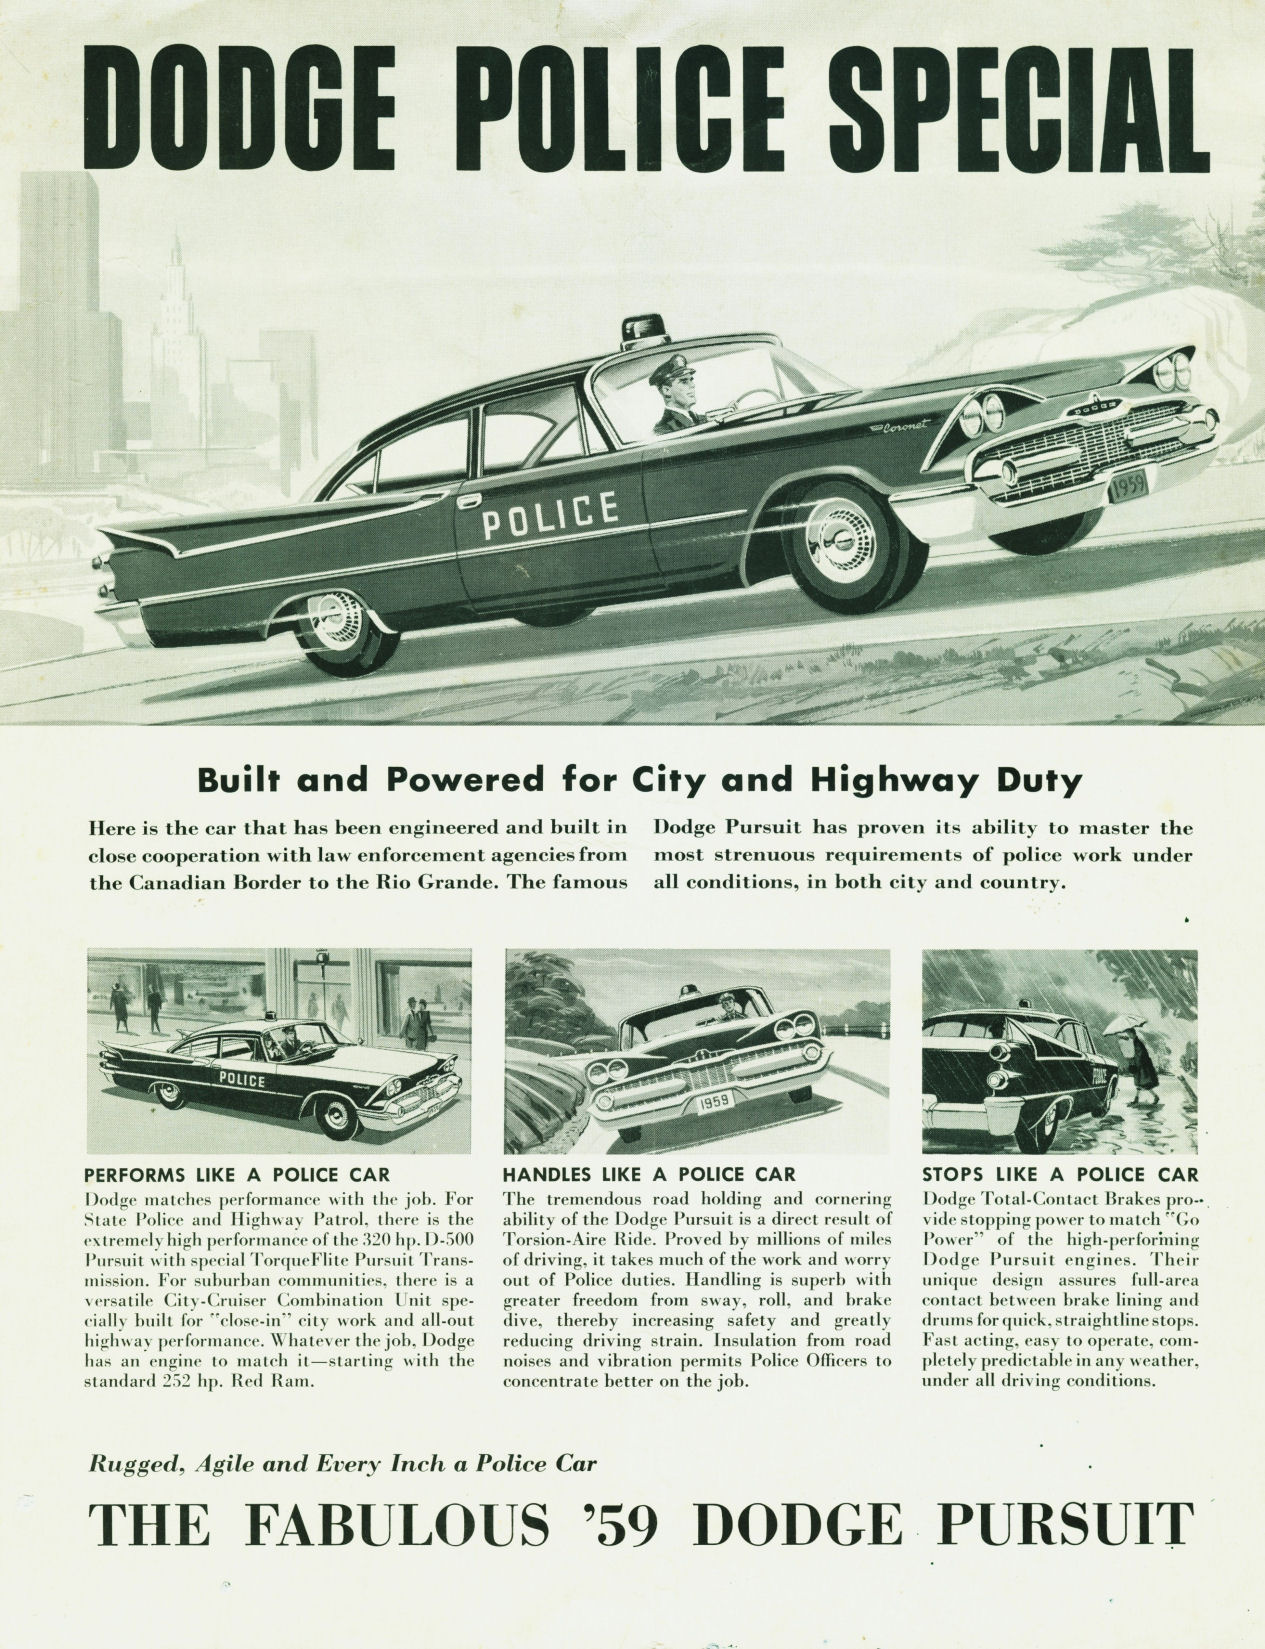 1959 Dodge Ad-10